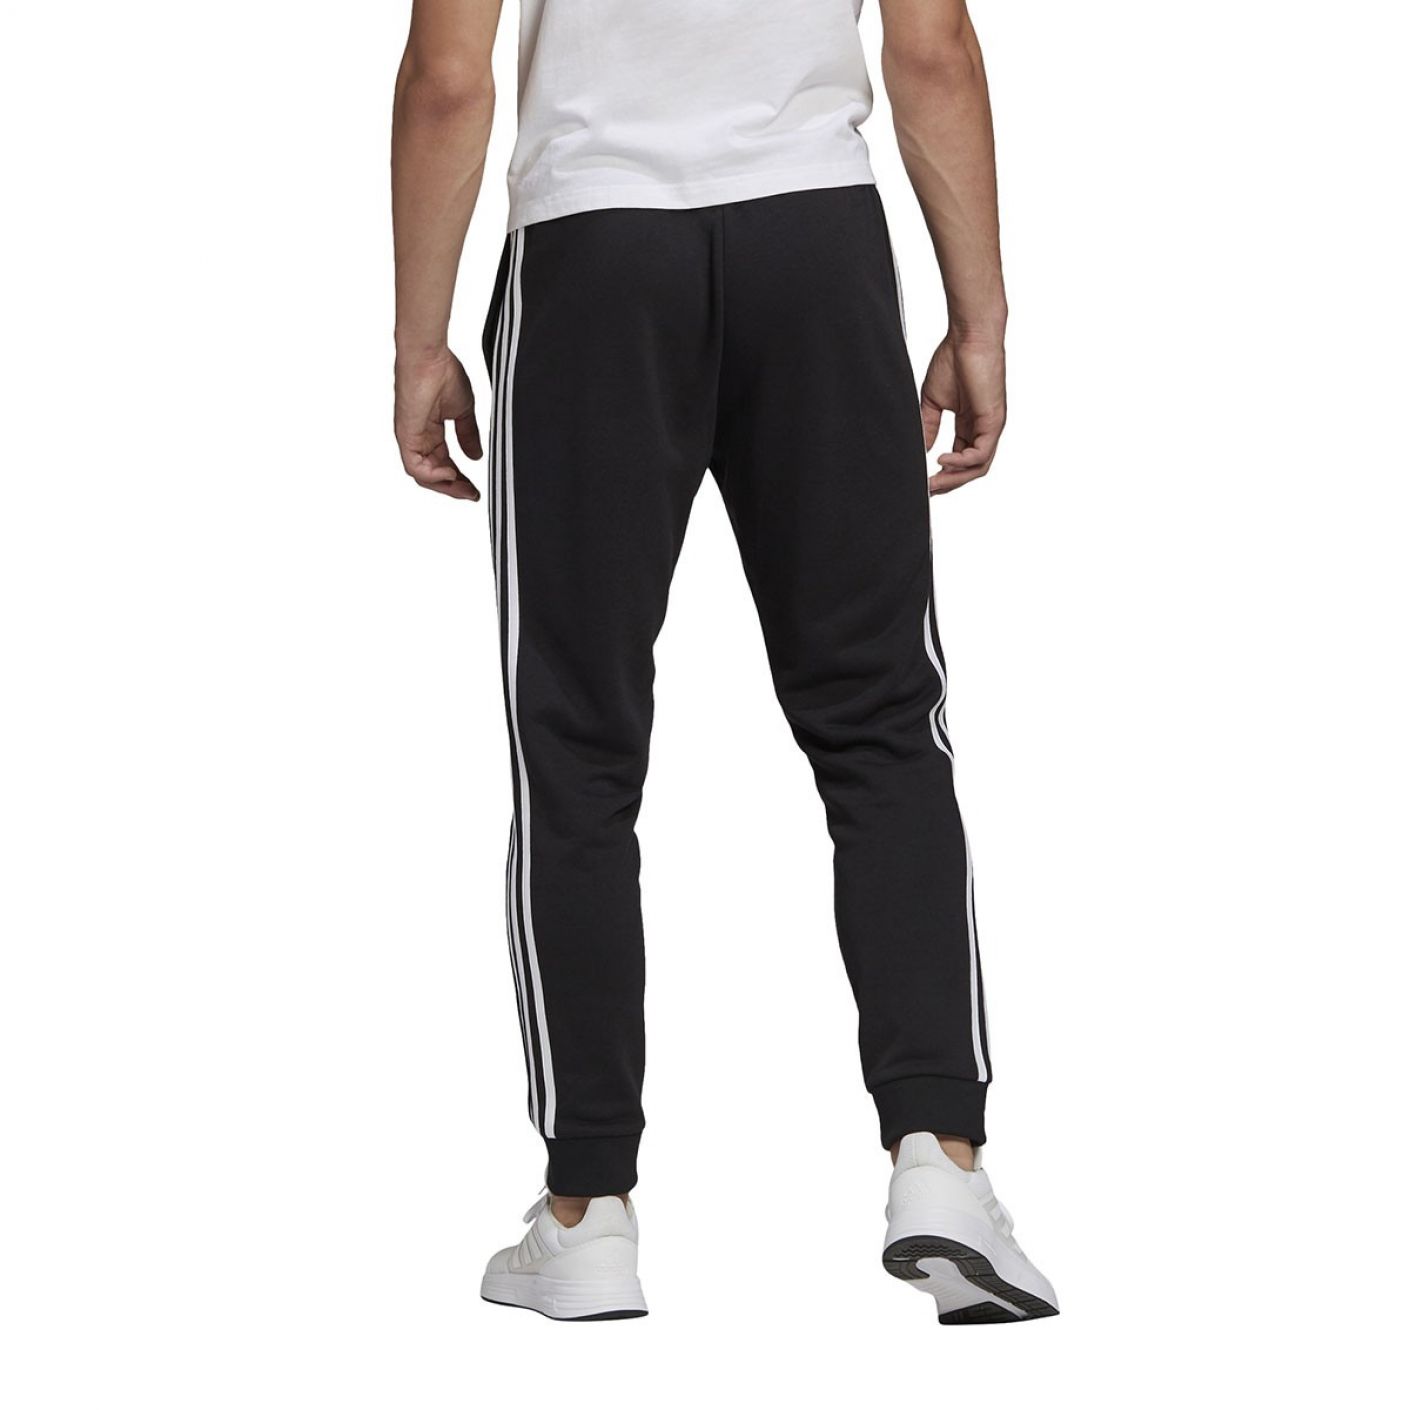 Adidas Essentials Tapered Cuff 3stripes Pants Black White